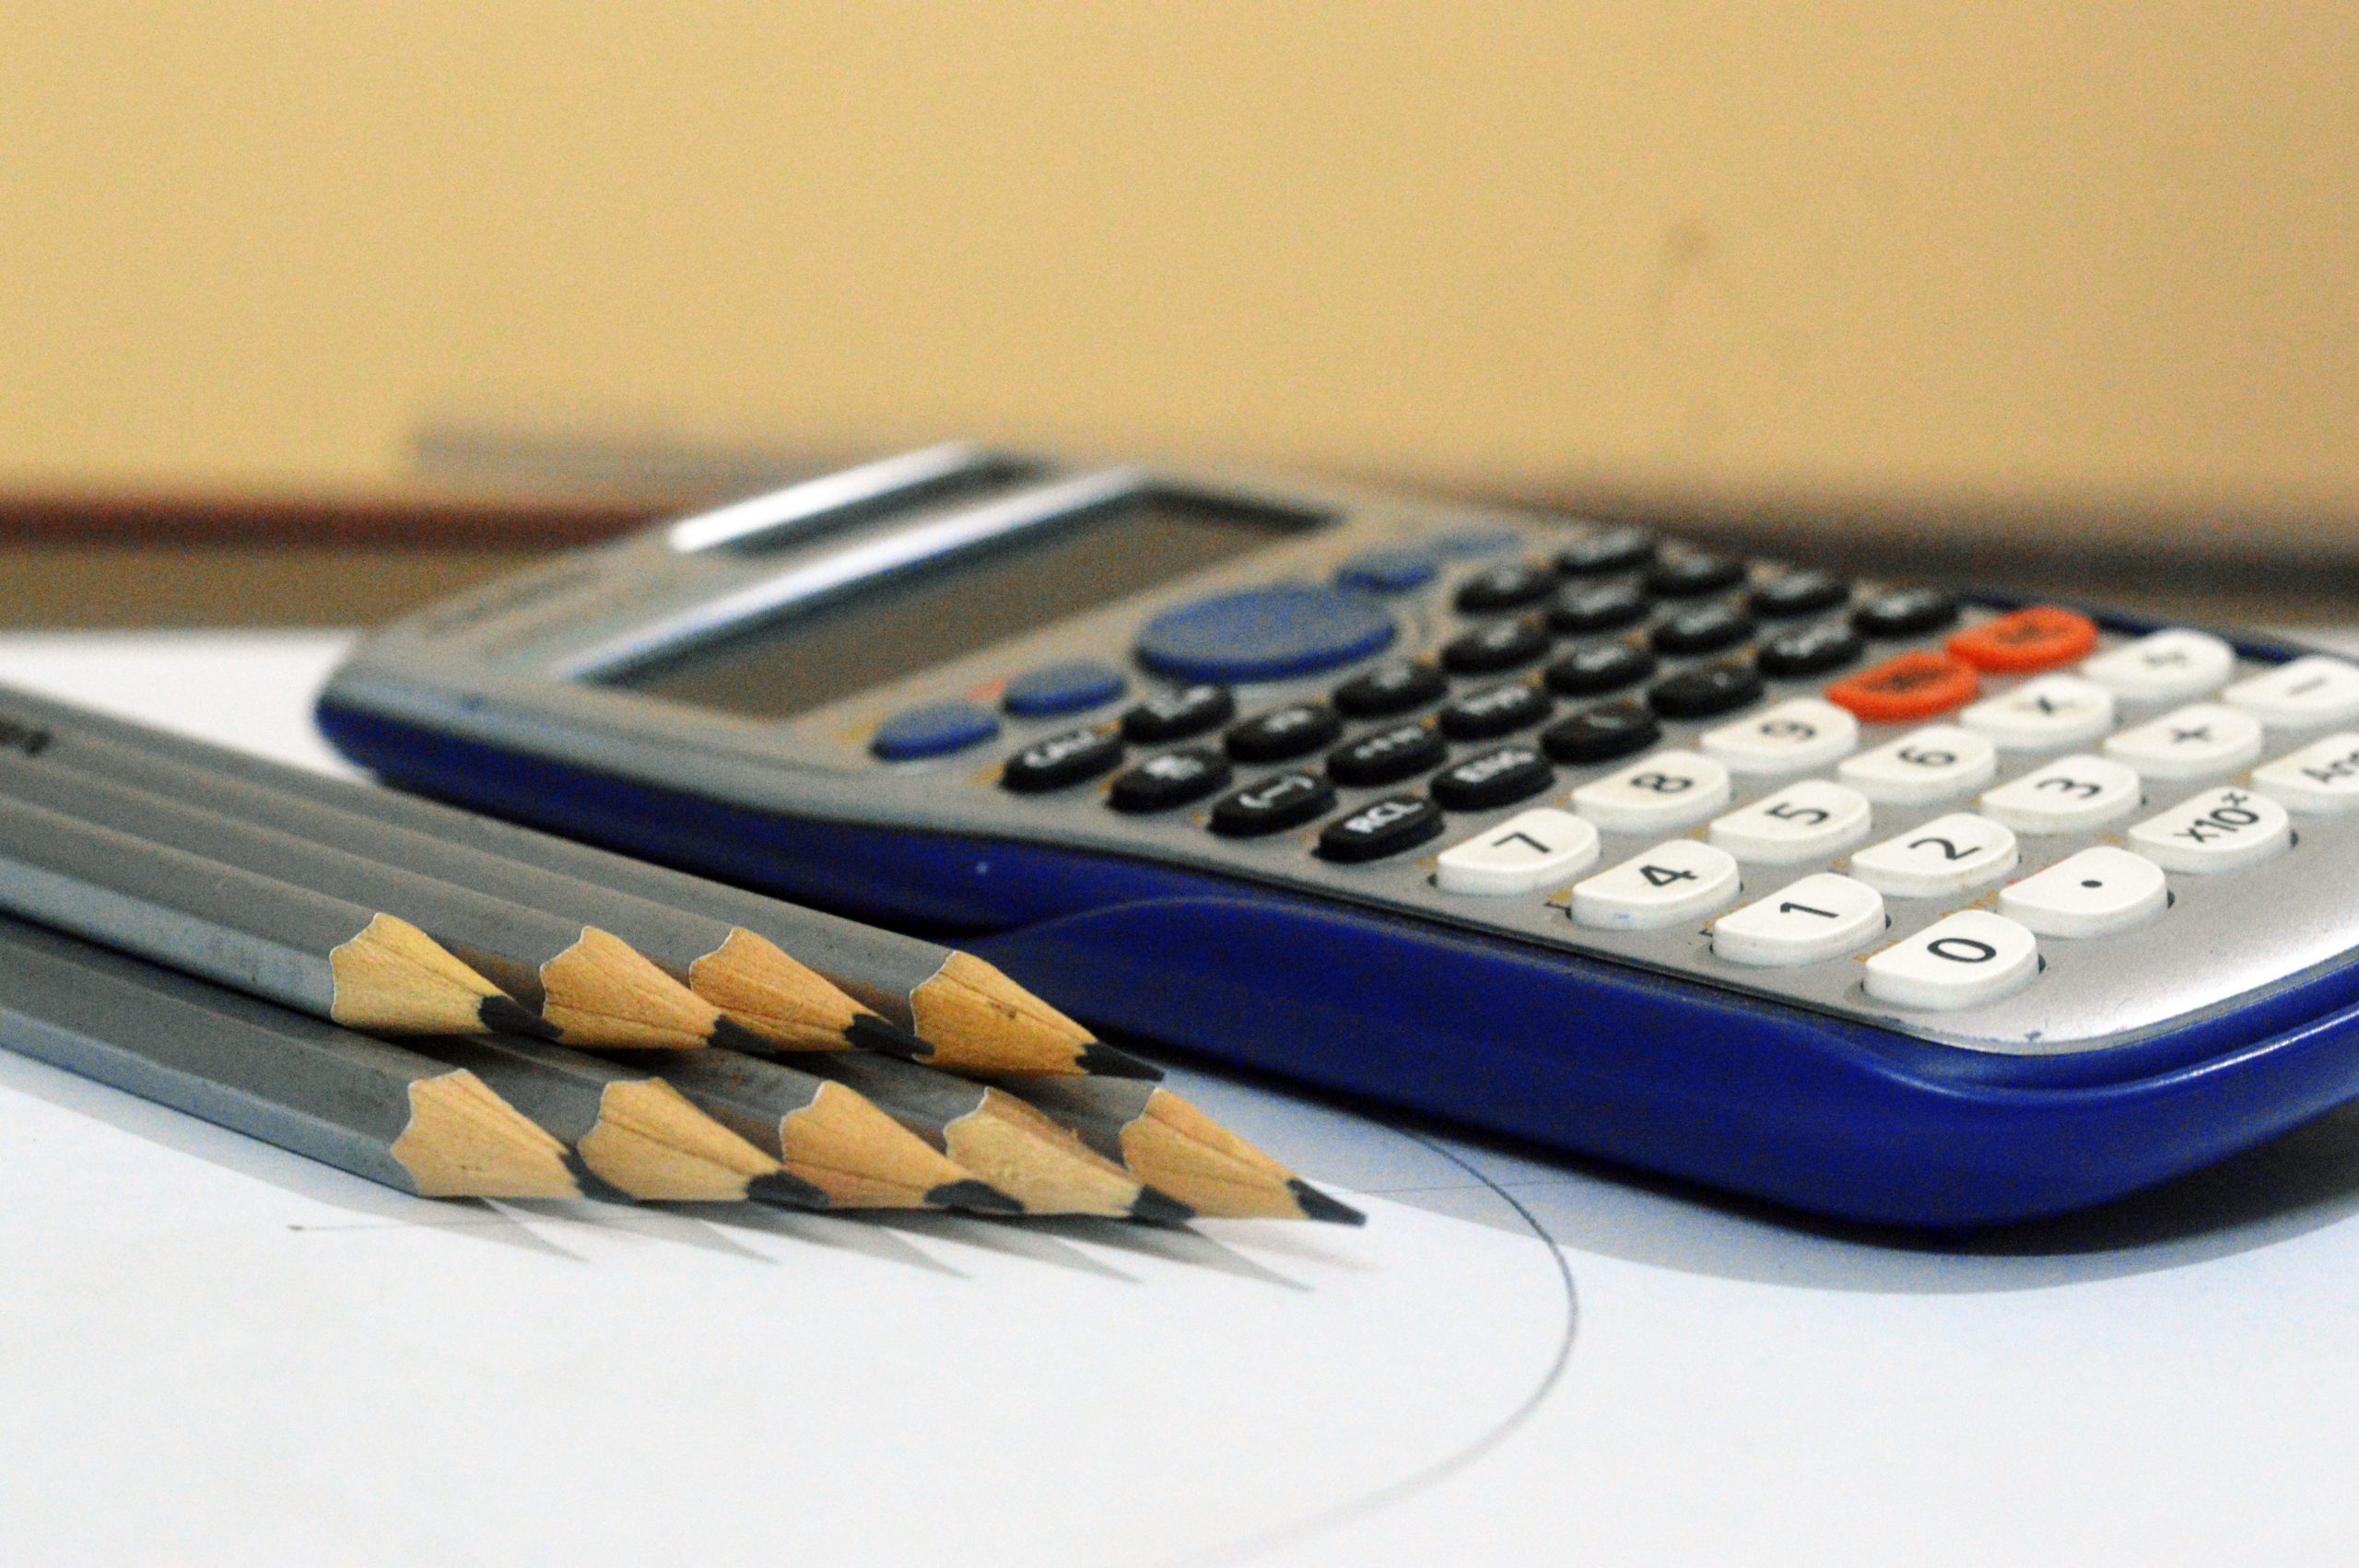 Scientific calculator and pencils